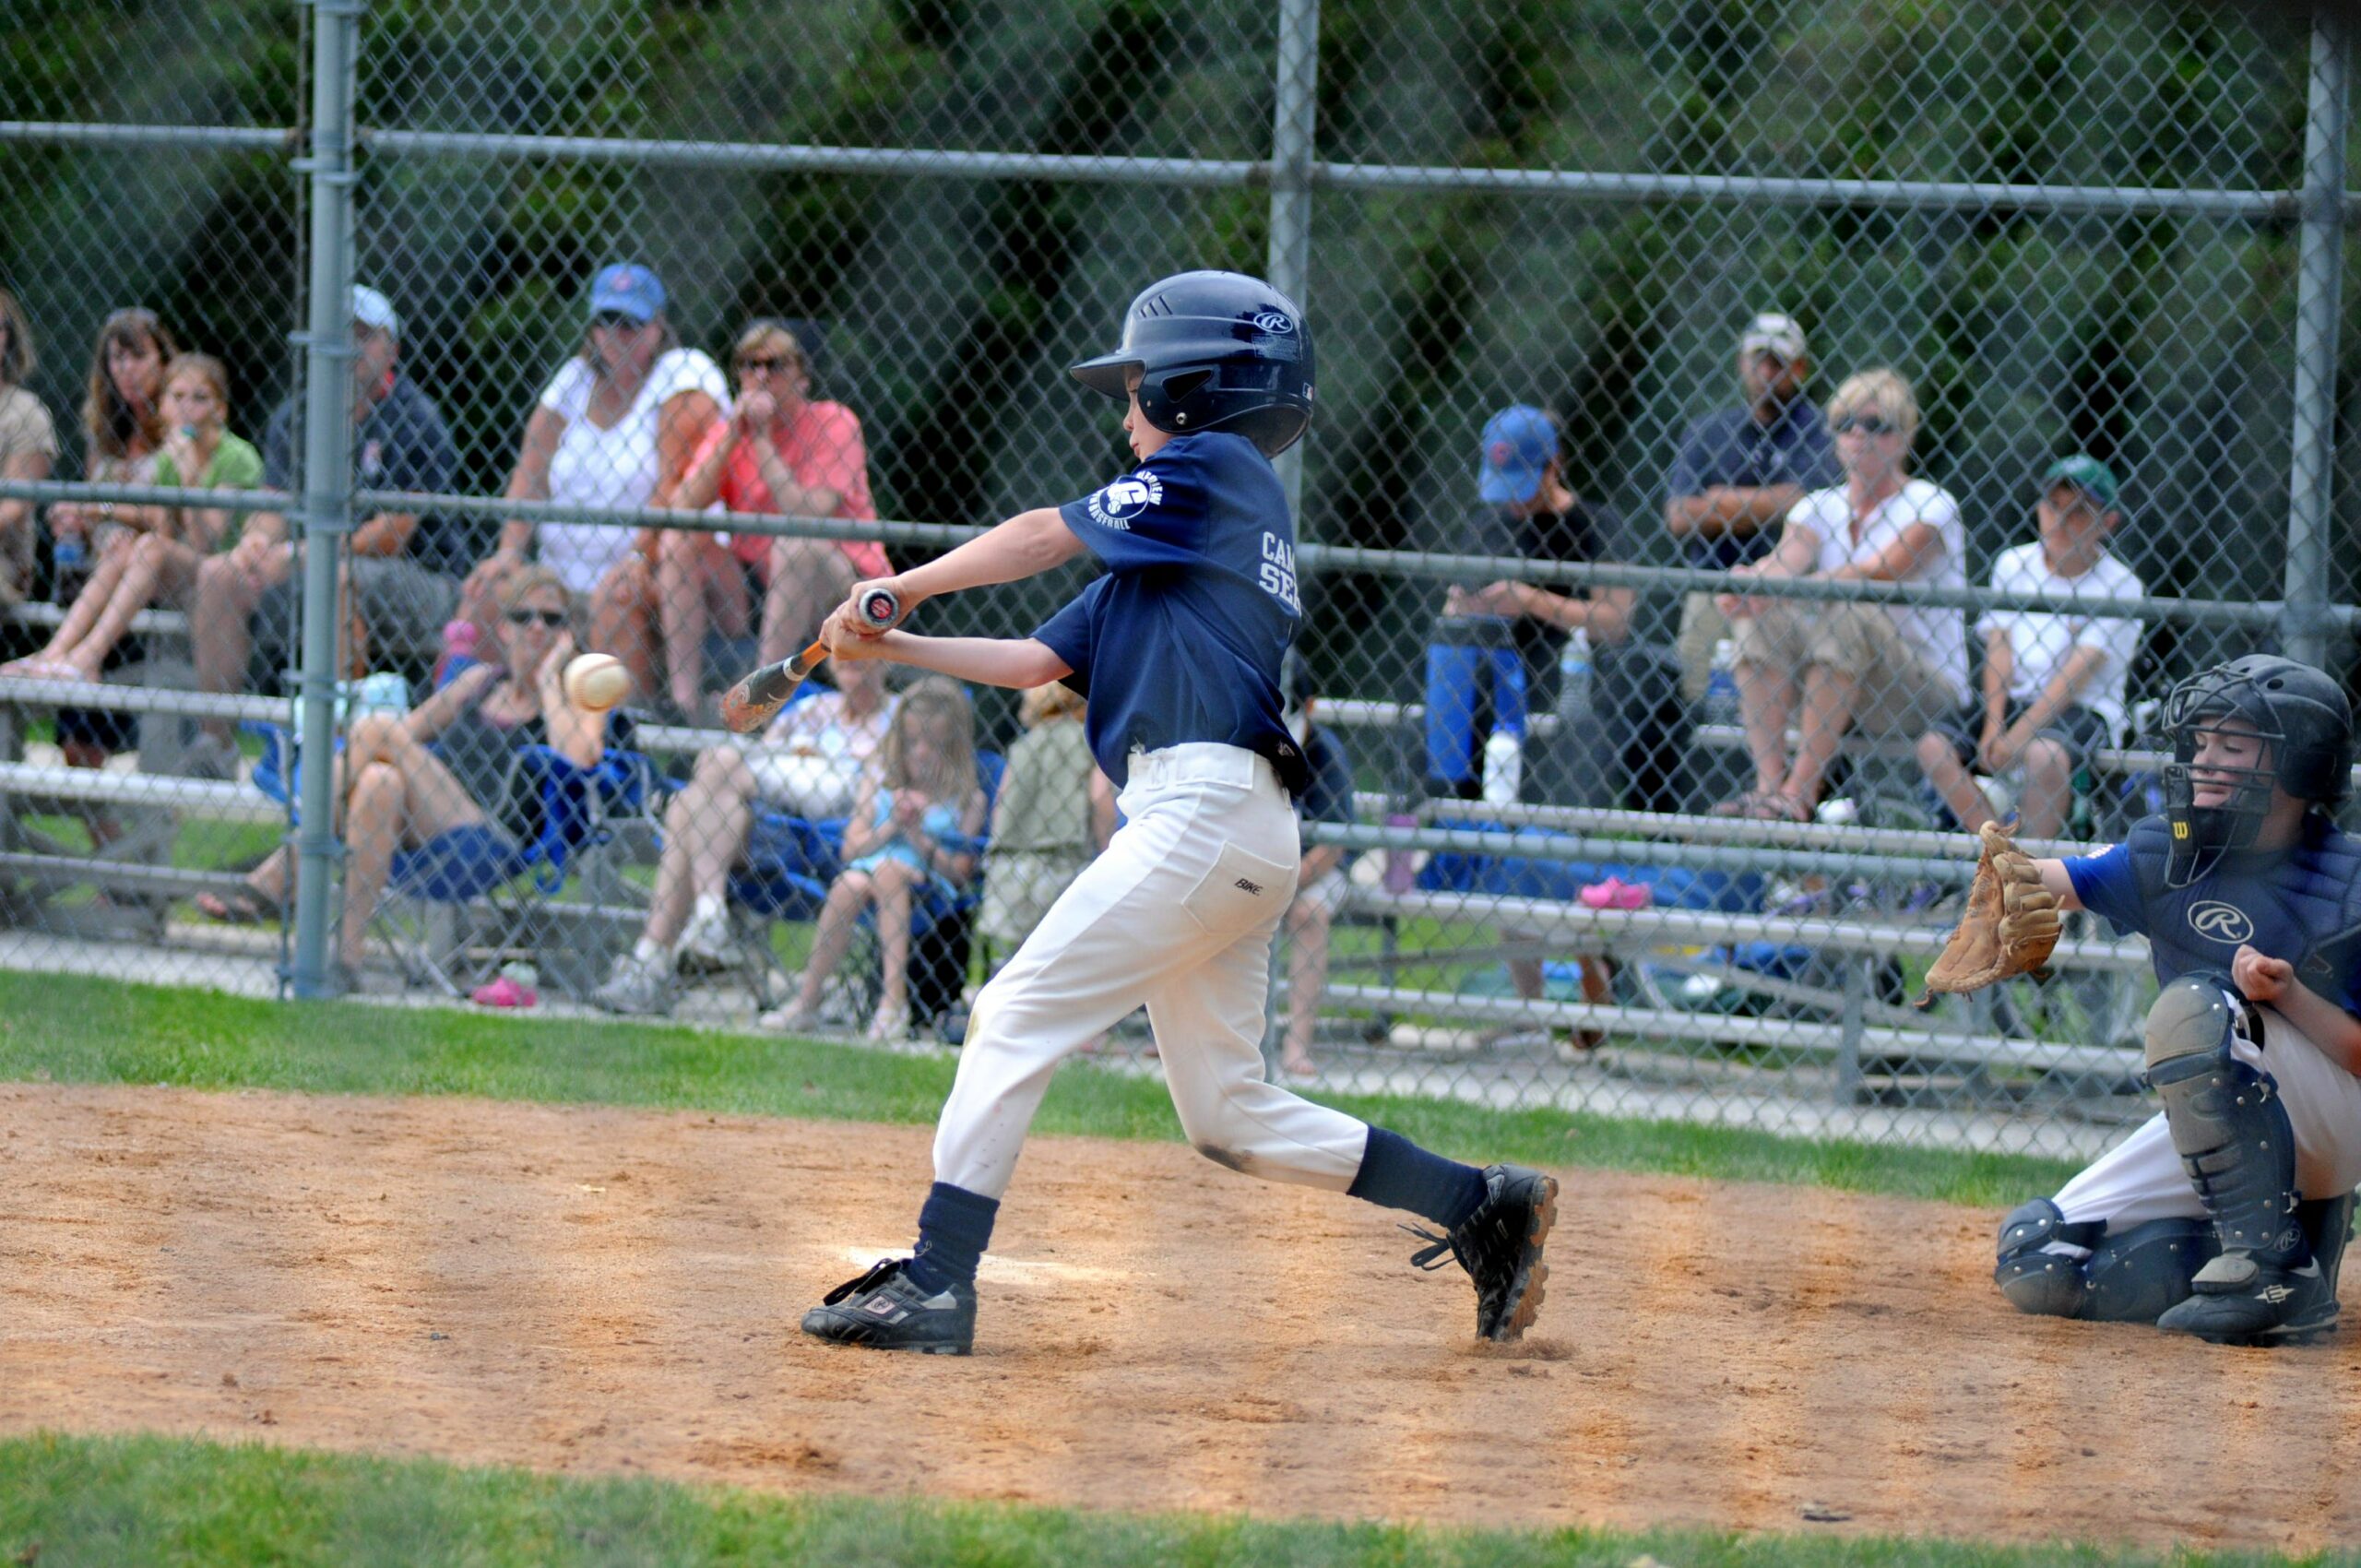 a kid swinging a bat to hit a baseball